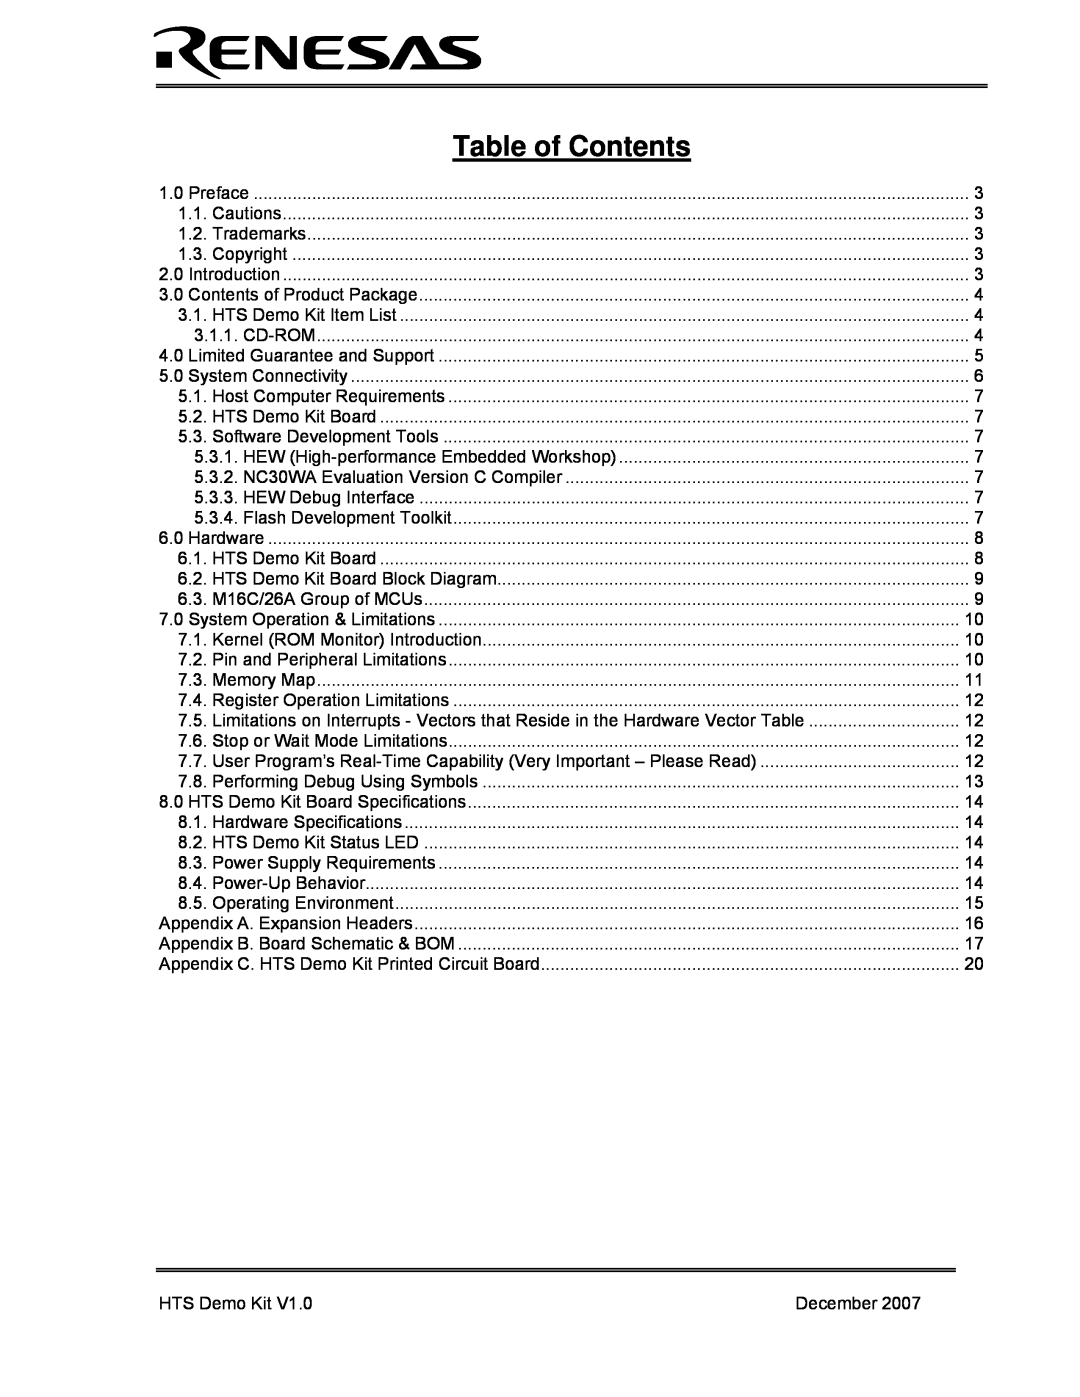 Renesas HEW Target user manual Table of Contents, HTS Demo Kit, December 